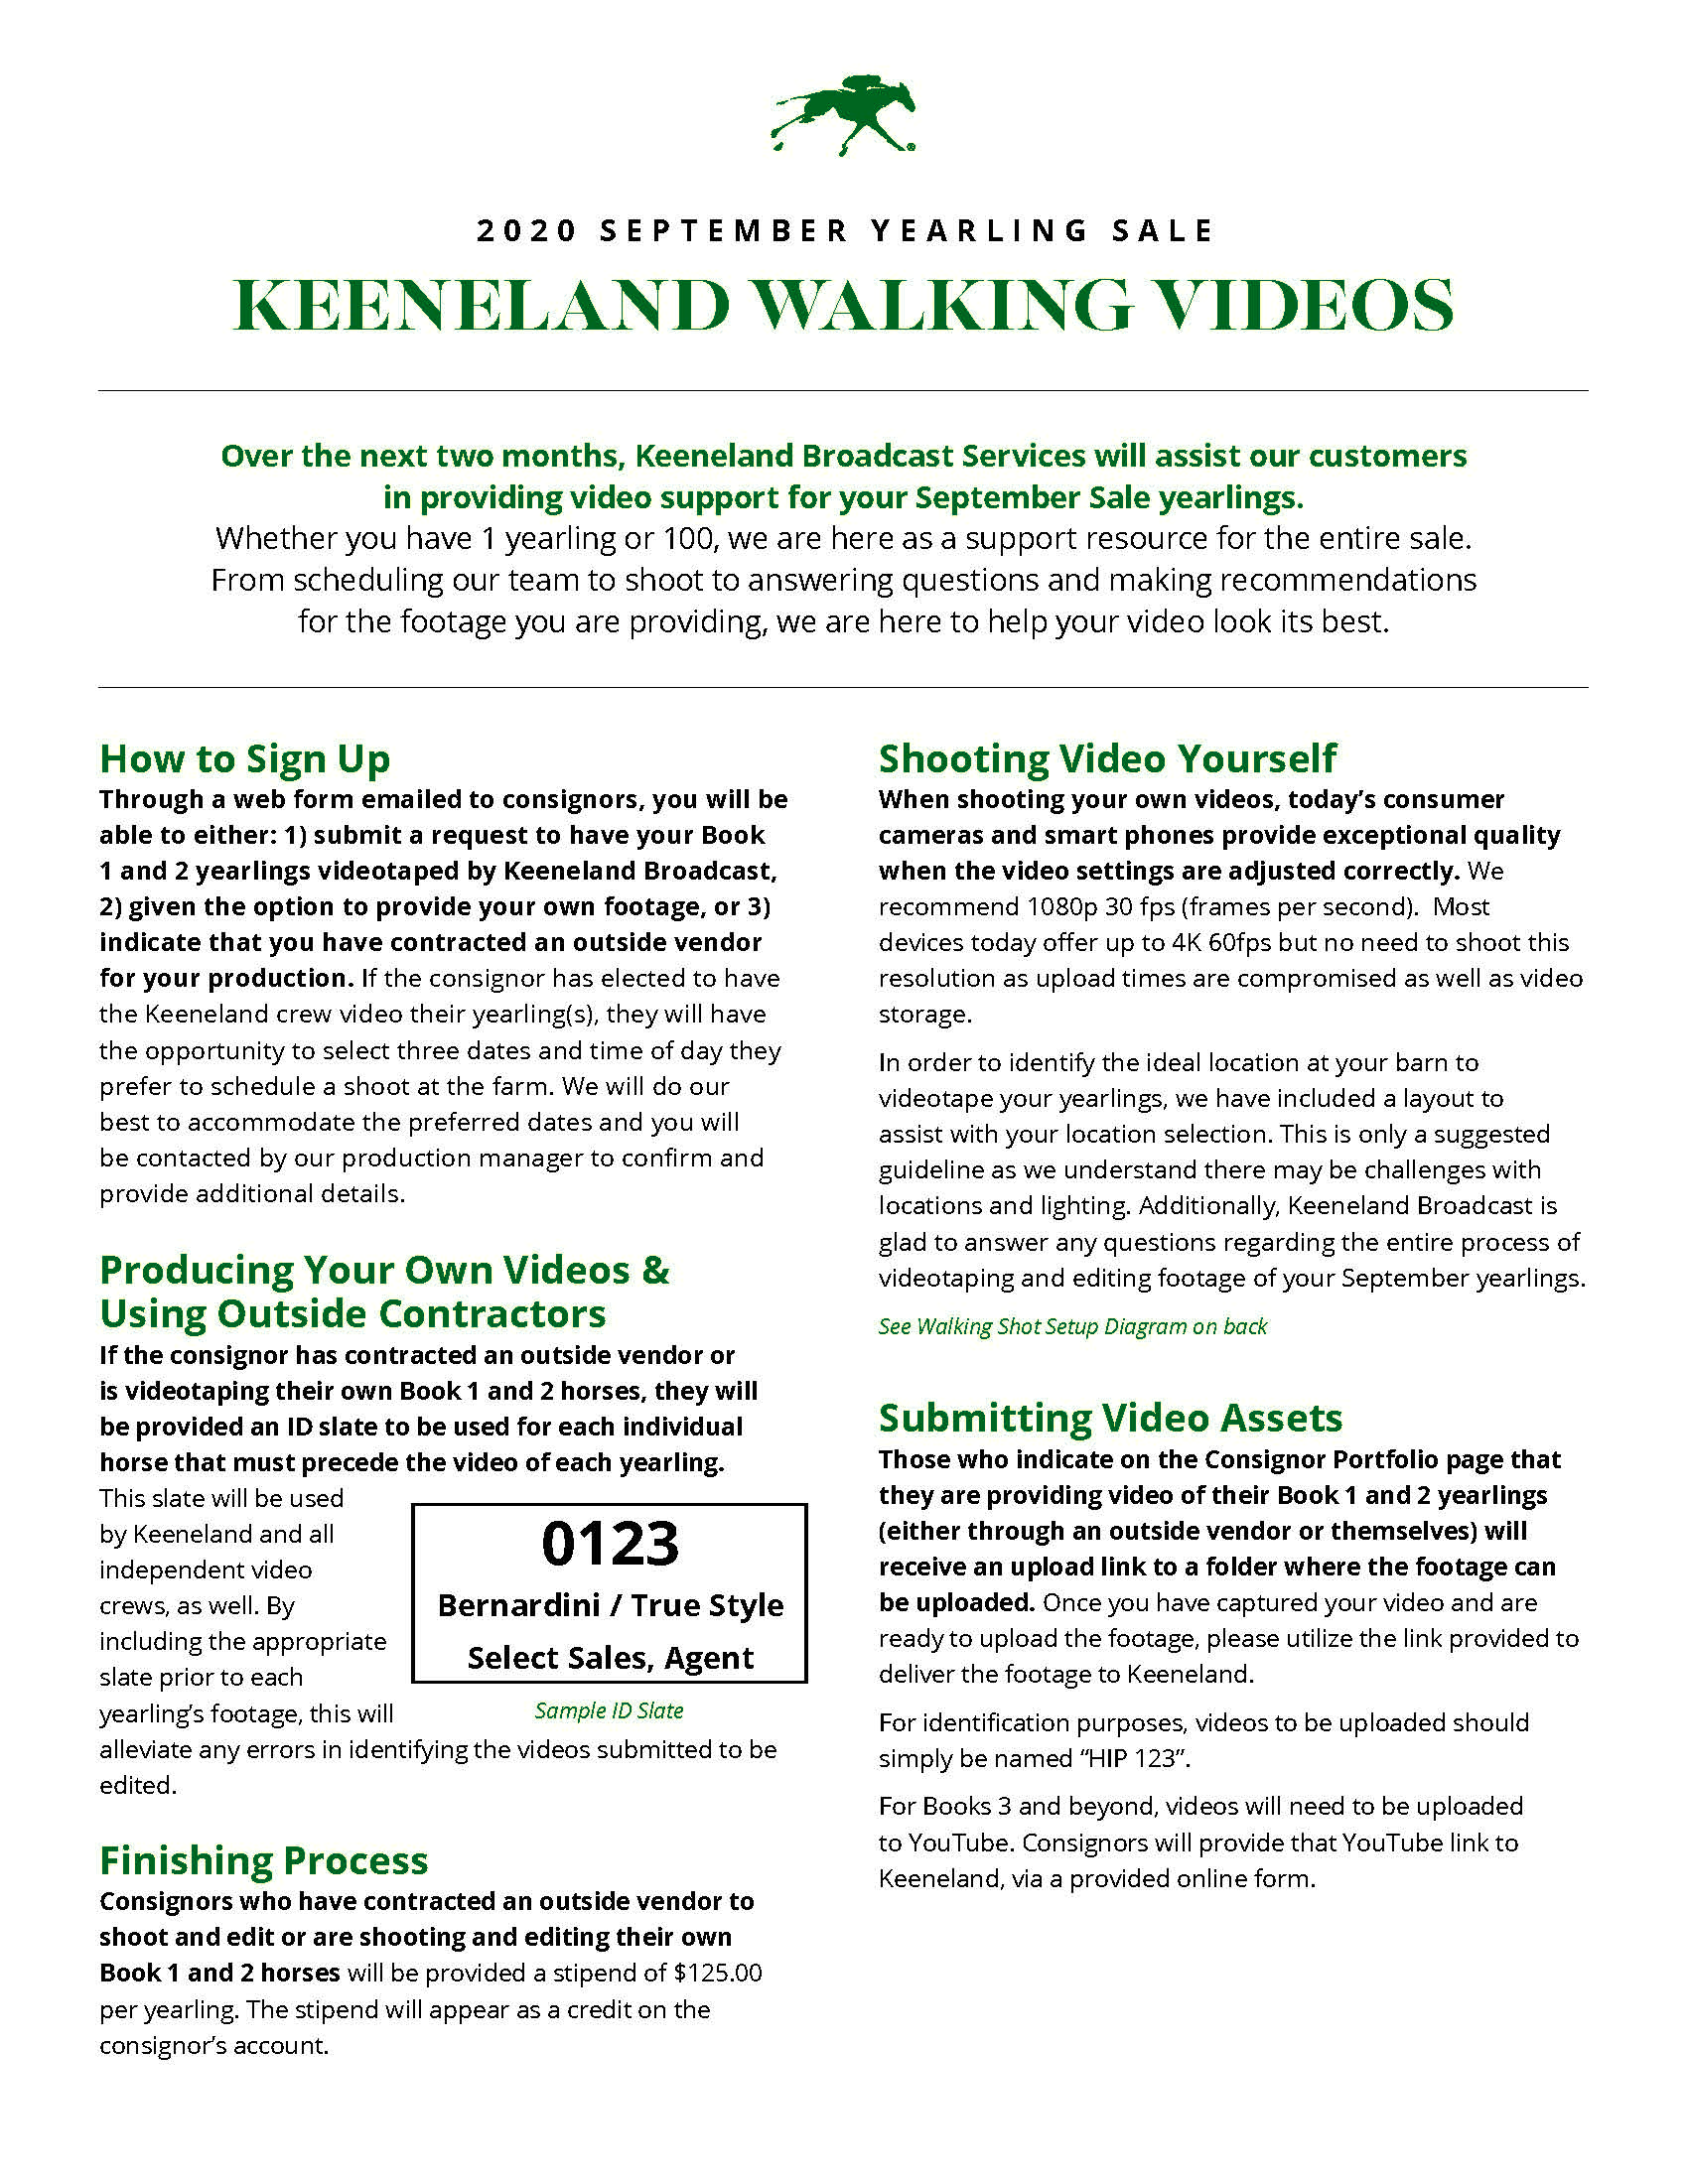 Keeneland September Sale Walking Video